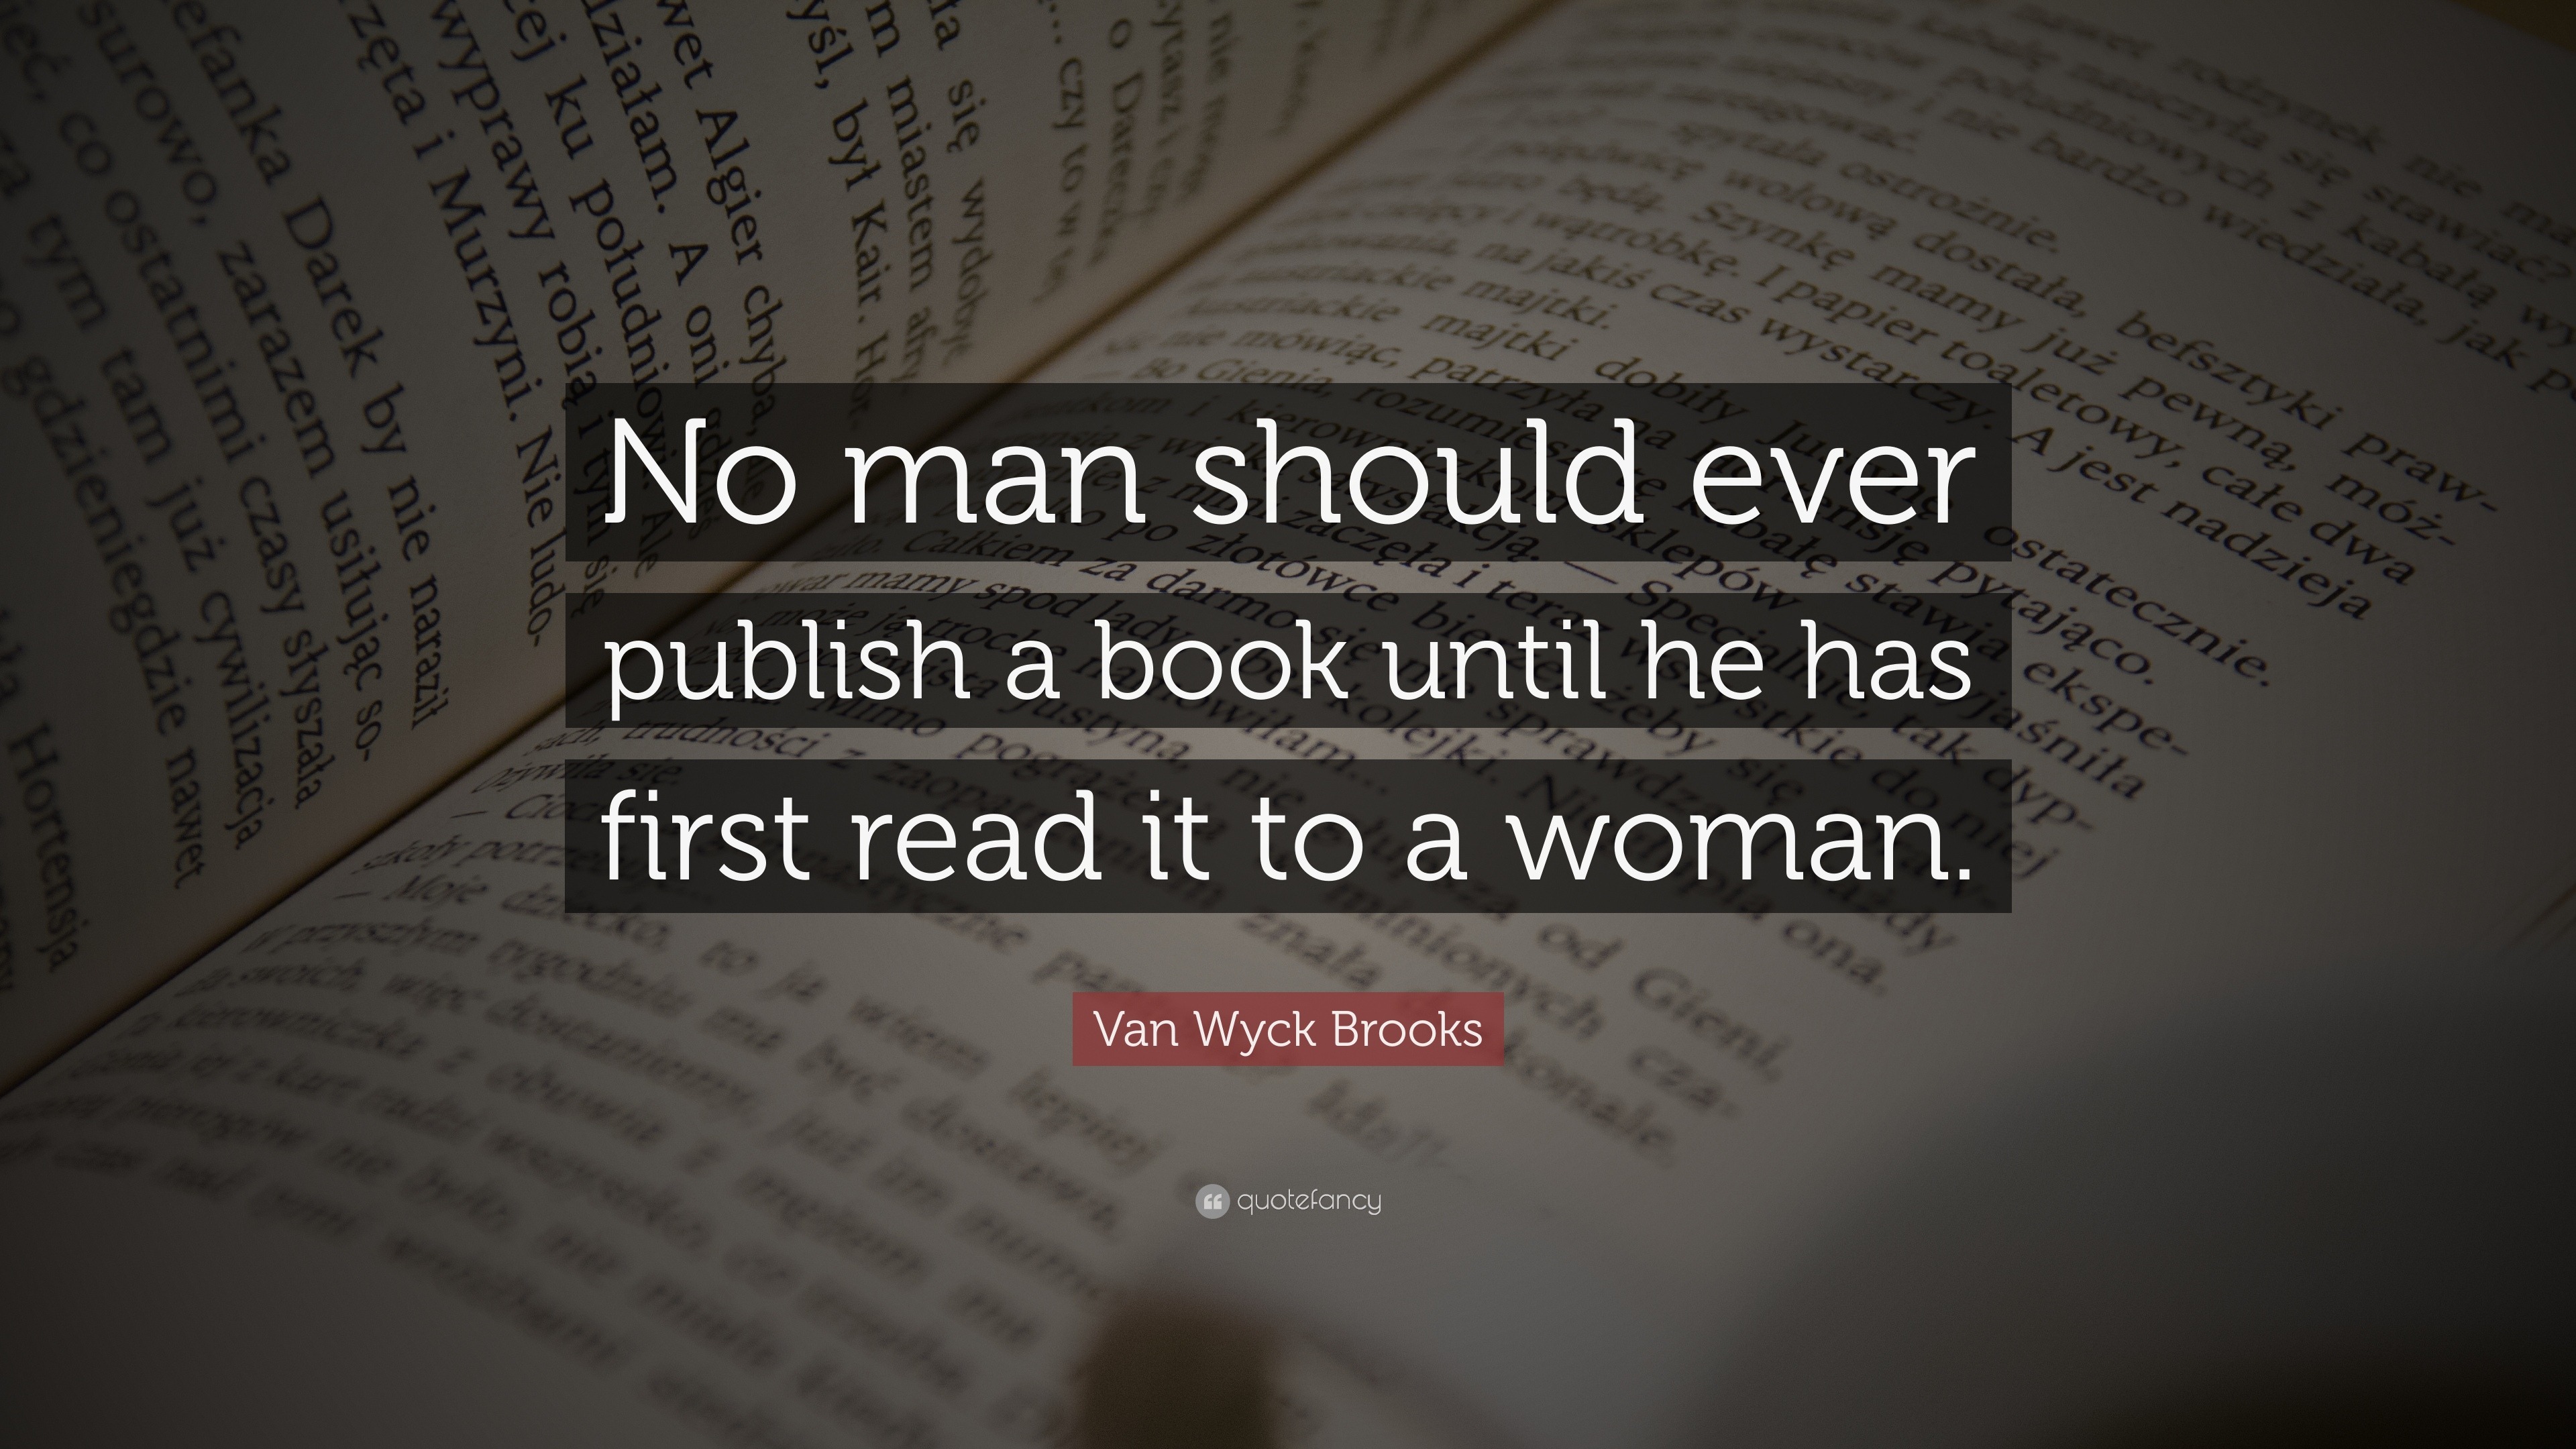 Van Wyck Brooks Quote: “No man should ever publish a book until he has ...